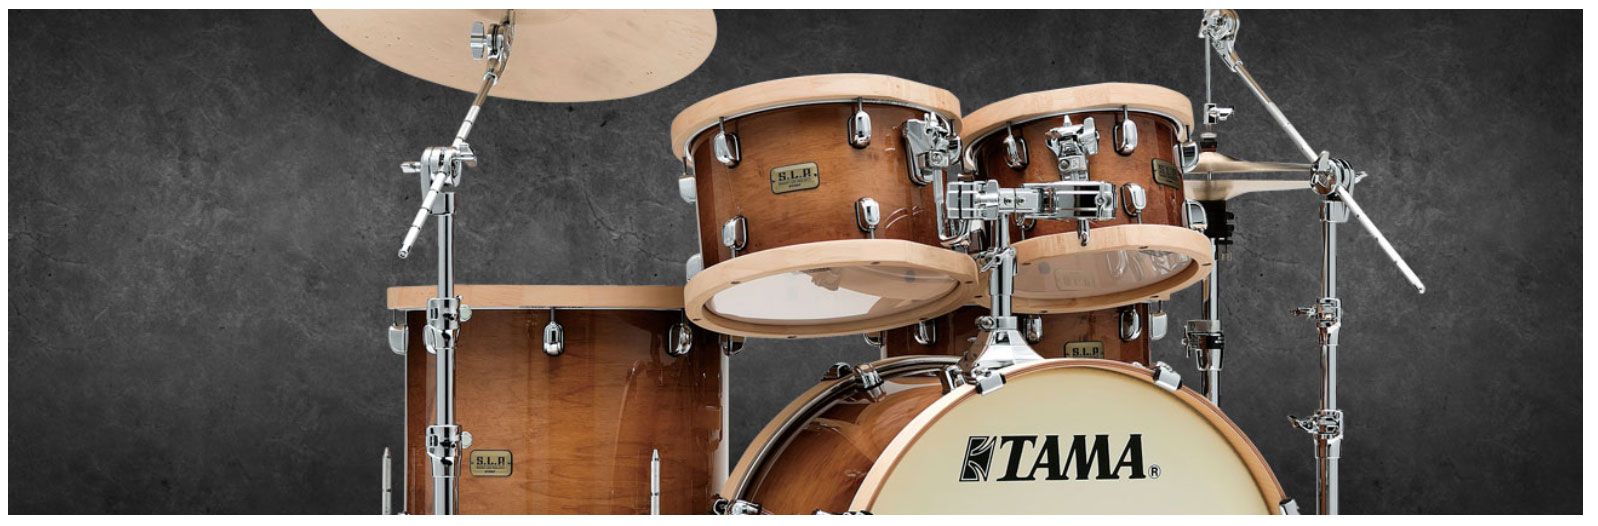 Tama Tam Slp 5pc Shell Kit - Rock drum kit - Variation 1